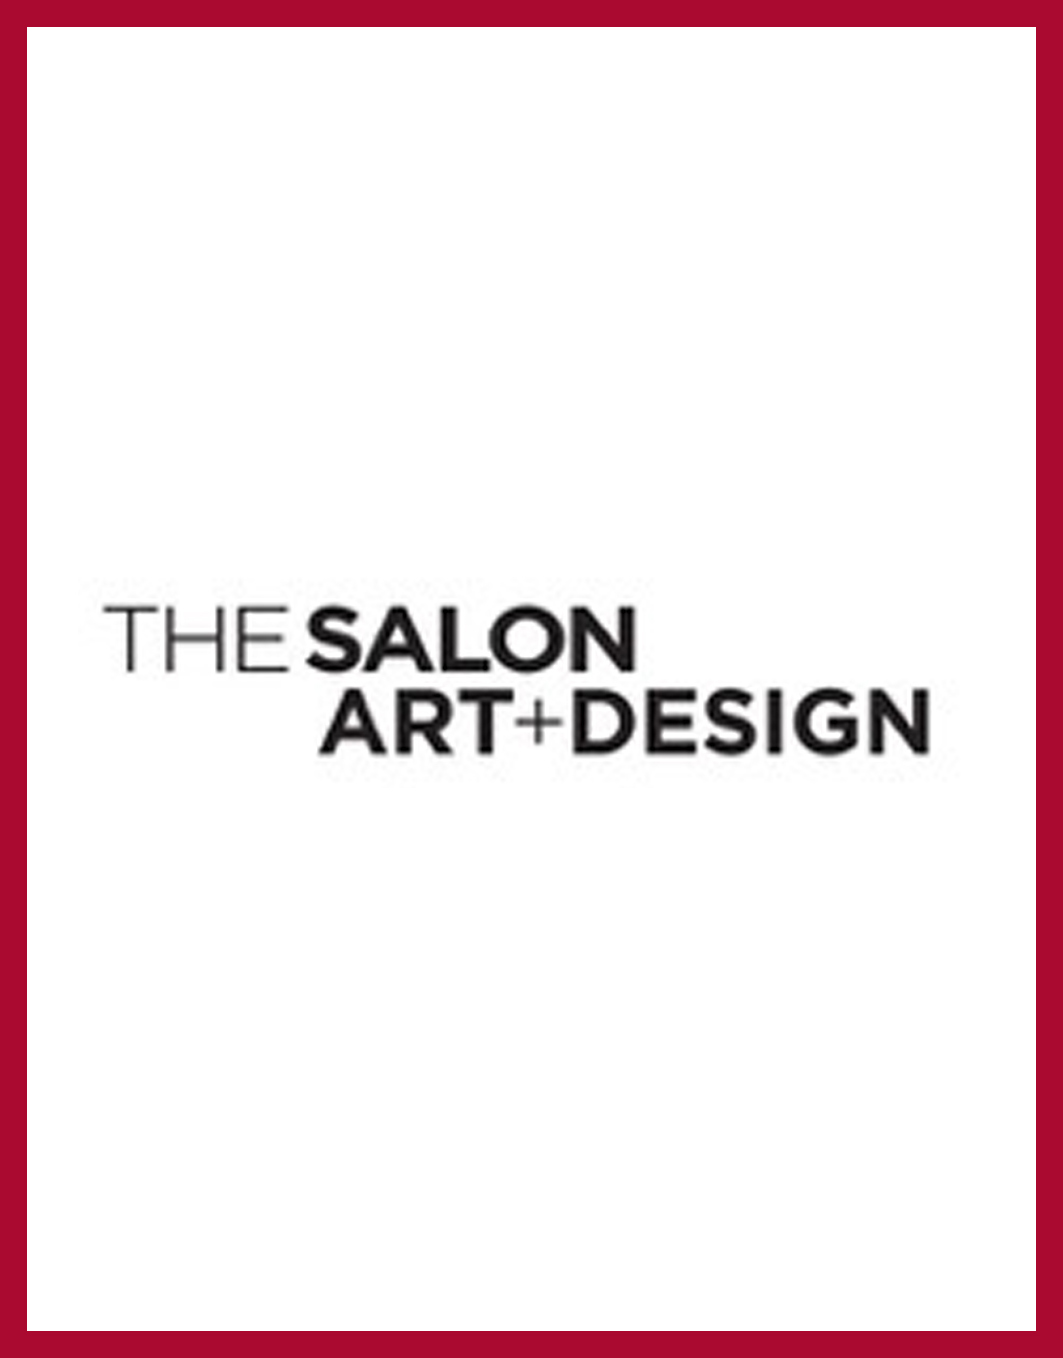  - The Salon Art + Design 2014